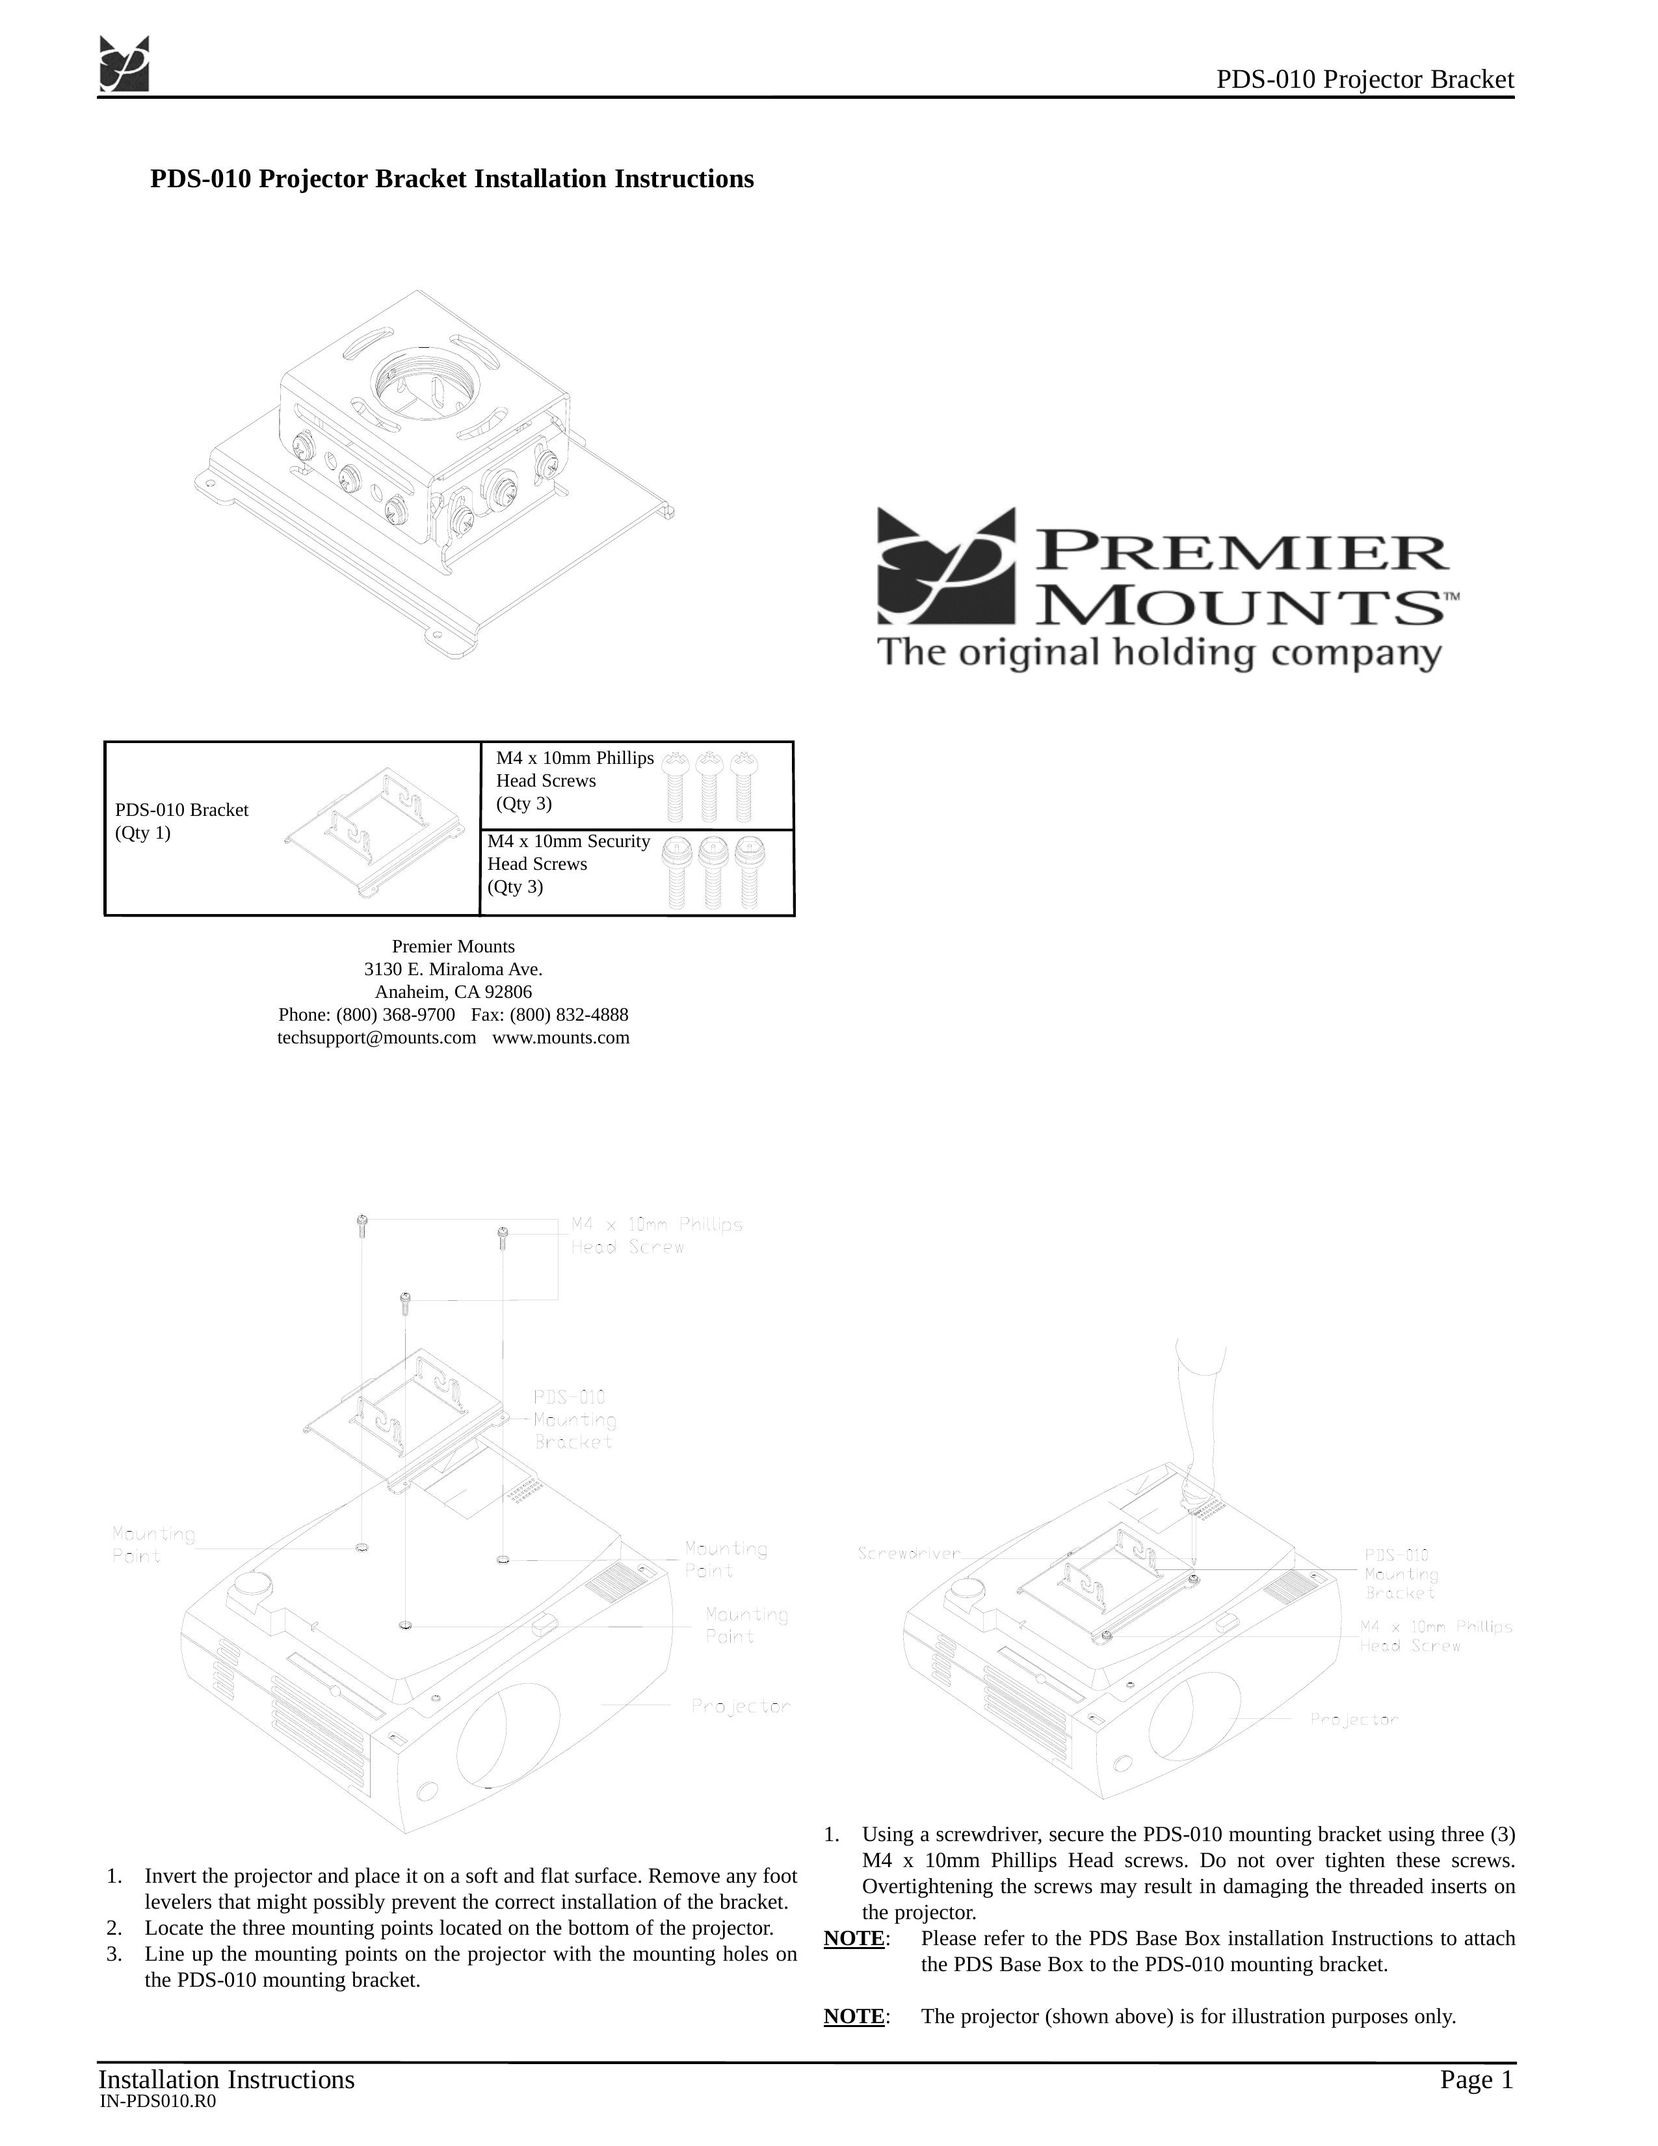 Premier Mounts PDS-010 Projector Accessories User Manual